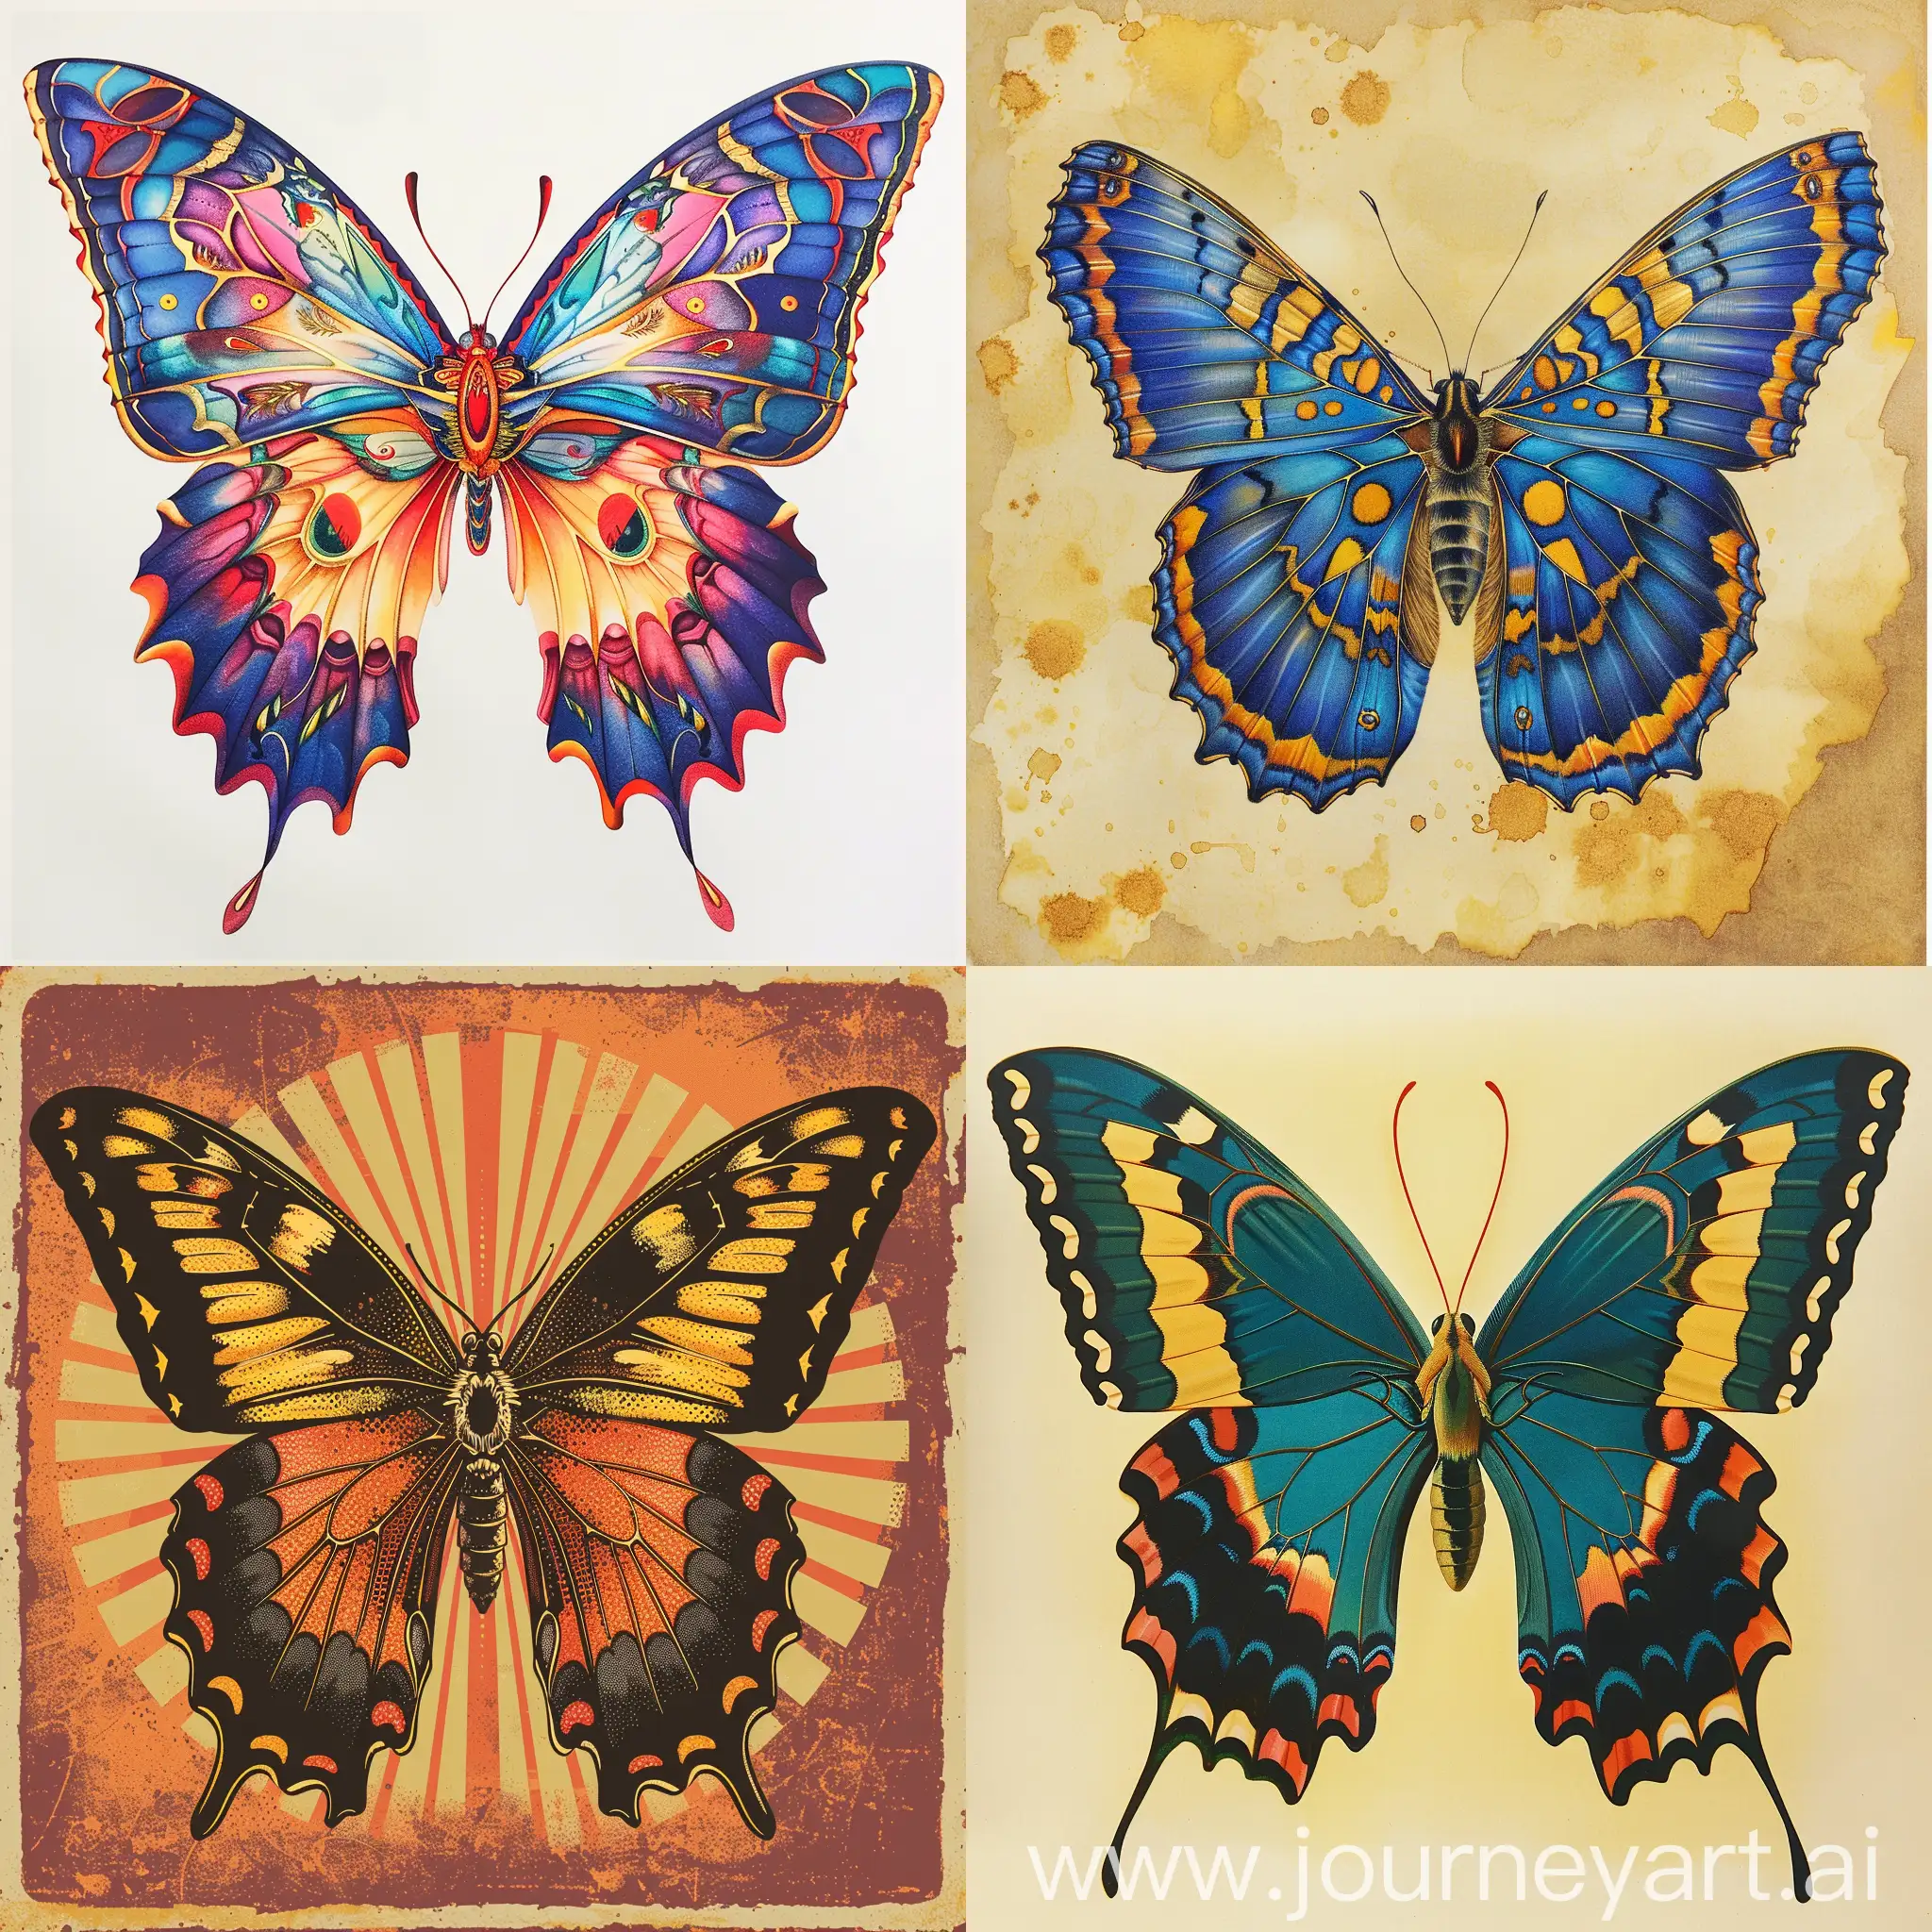 Ivan-BilibinInspired-Butterfly-Design